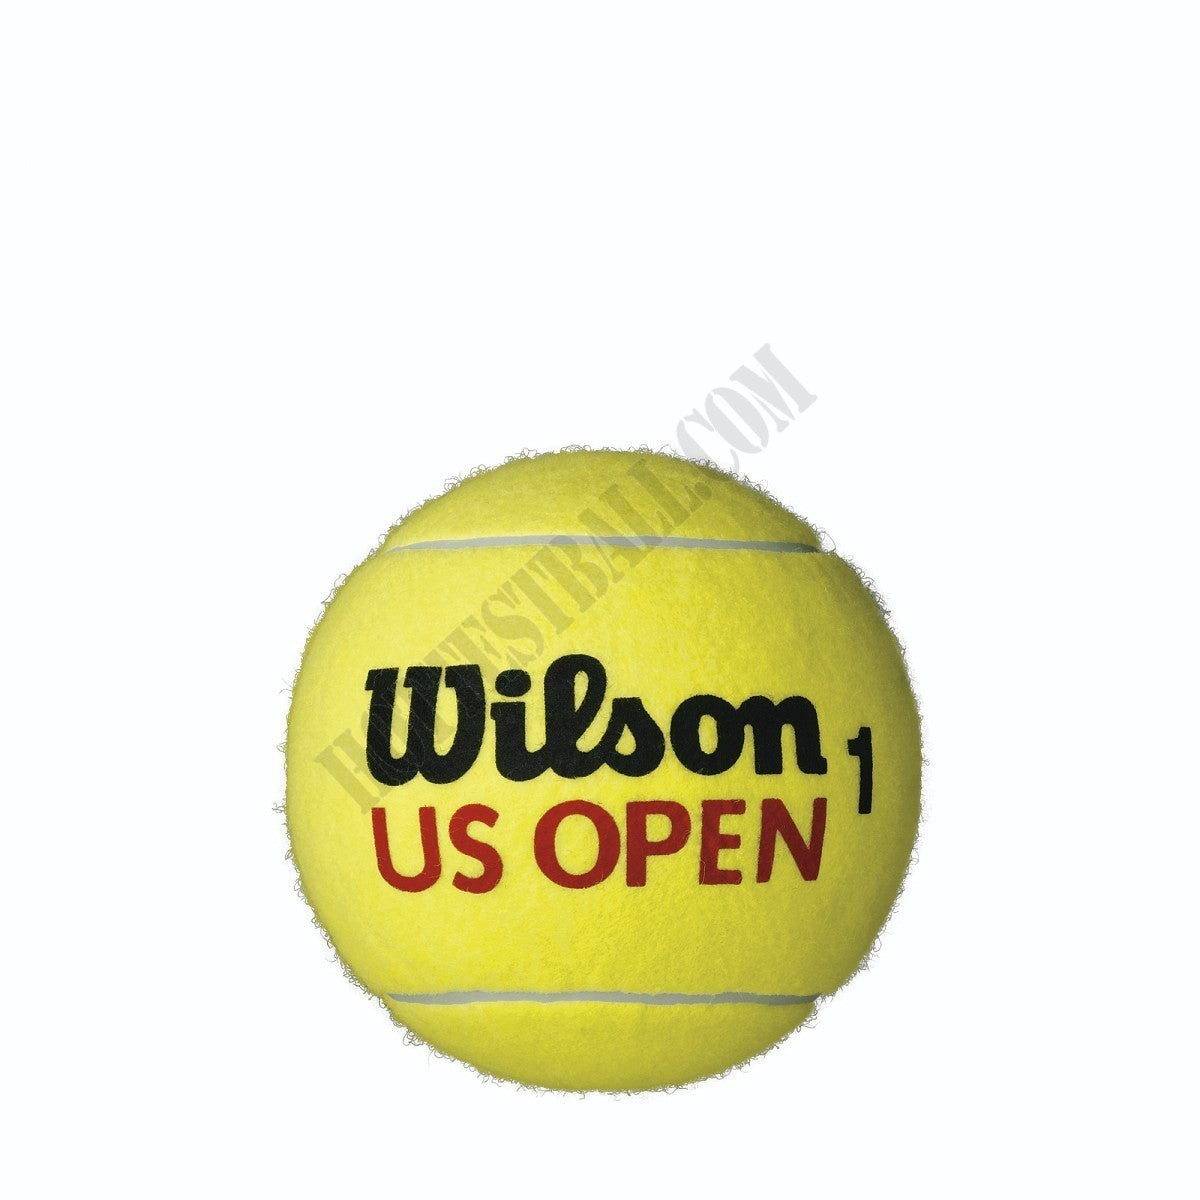 US Open Mini Jumbo Yellow 5" Tennis Ball - Wilson Discount Store - US Open Mini Jumbo Yellow 5" Tennis Ball - Wilson Discount Store